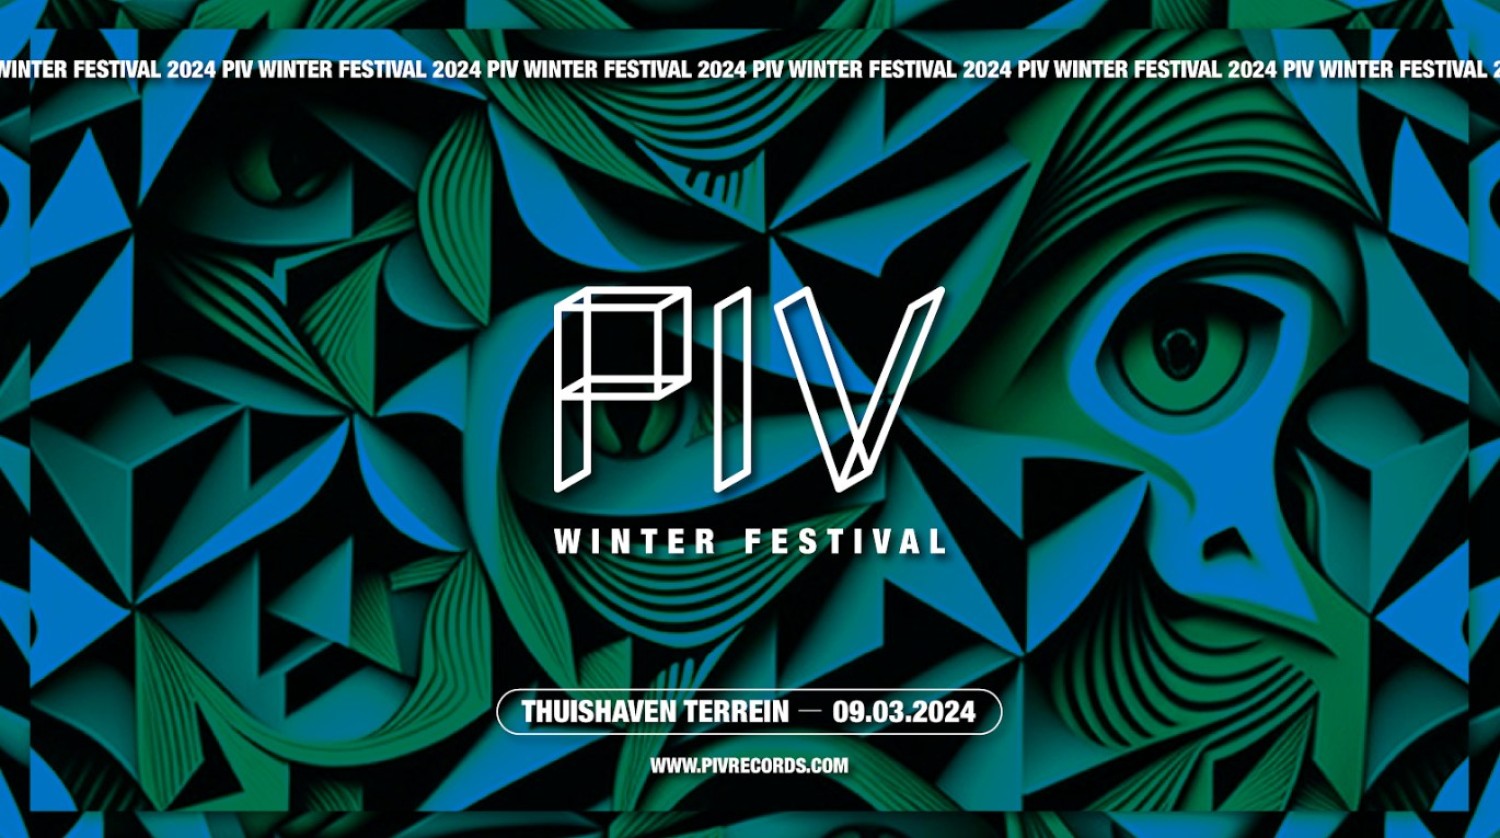 PIV Winterfestival